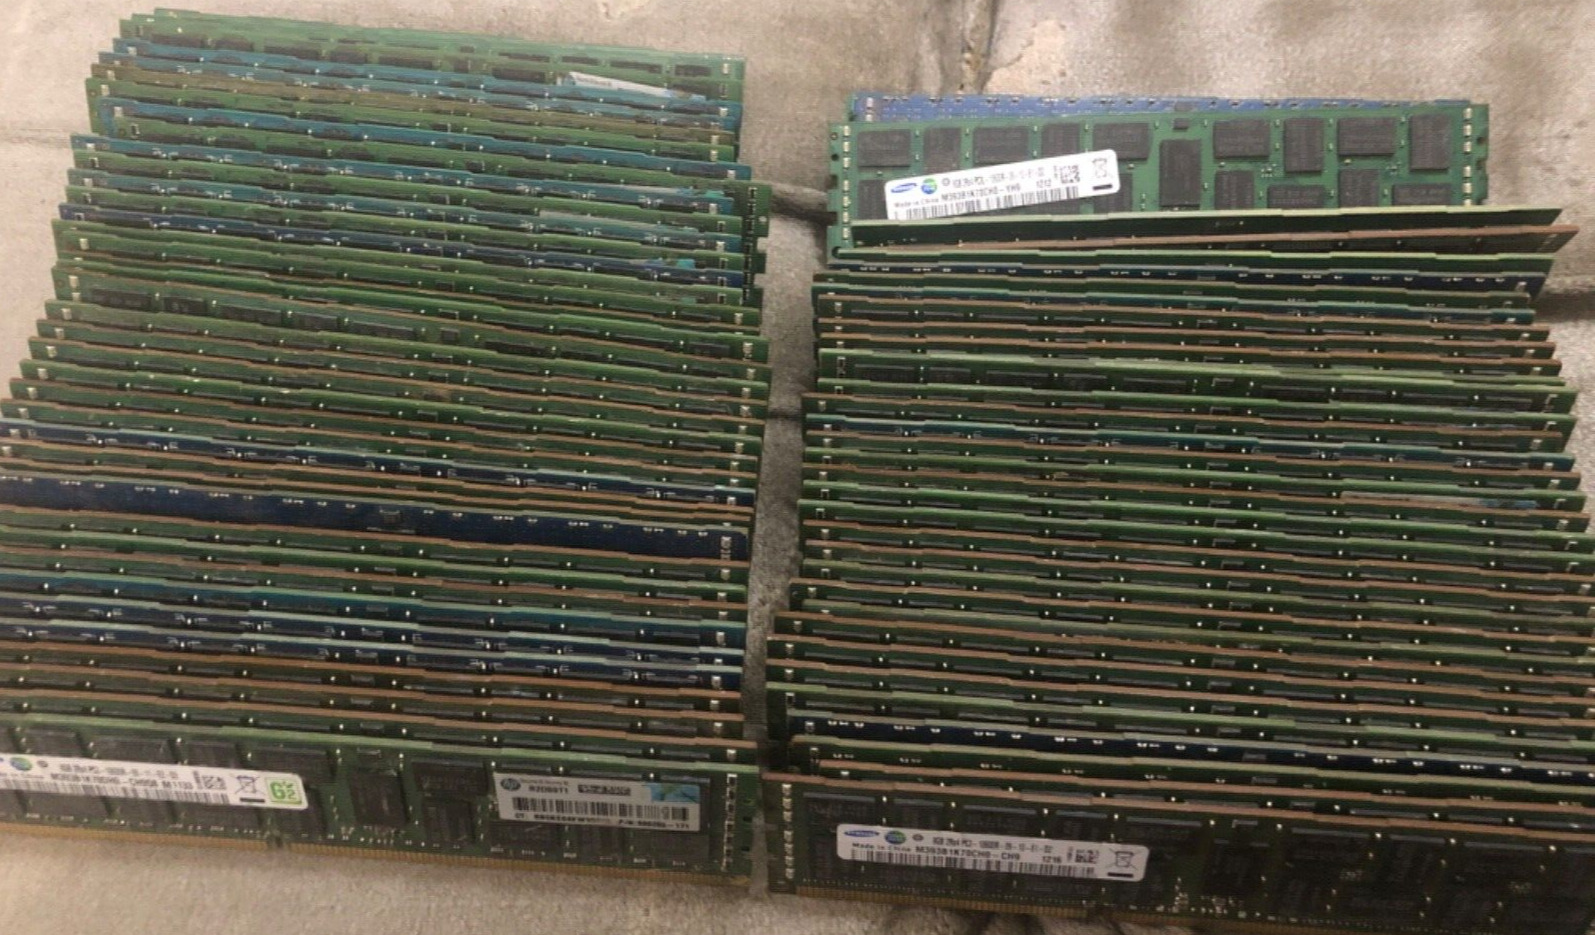 Lot of 80 Mixed Major Brands 8GB PC3 Registered ECC Server RAM Mixed Speeds